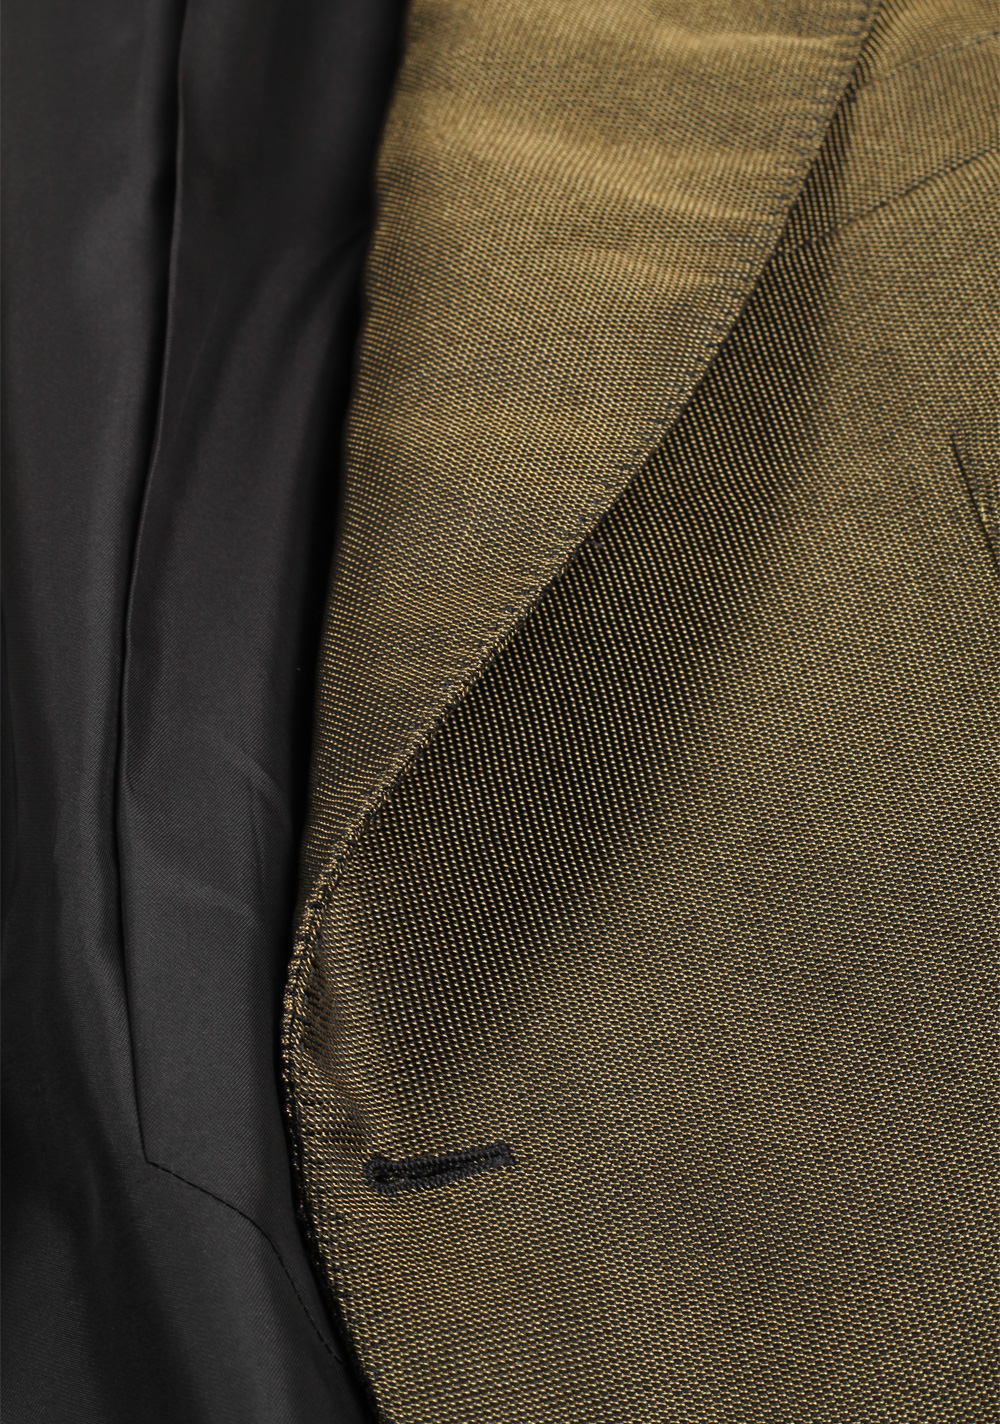 TOM FORD Atticus Gold Tuxedo Dinner Jacket Size 50C / 40S U.S. | Costume Limité